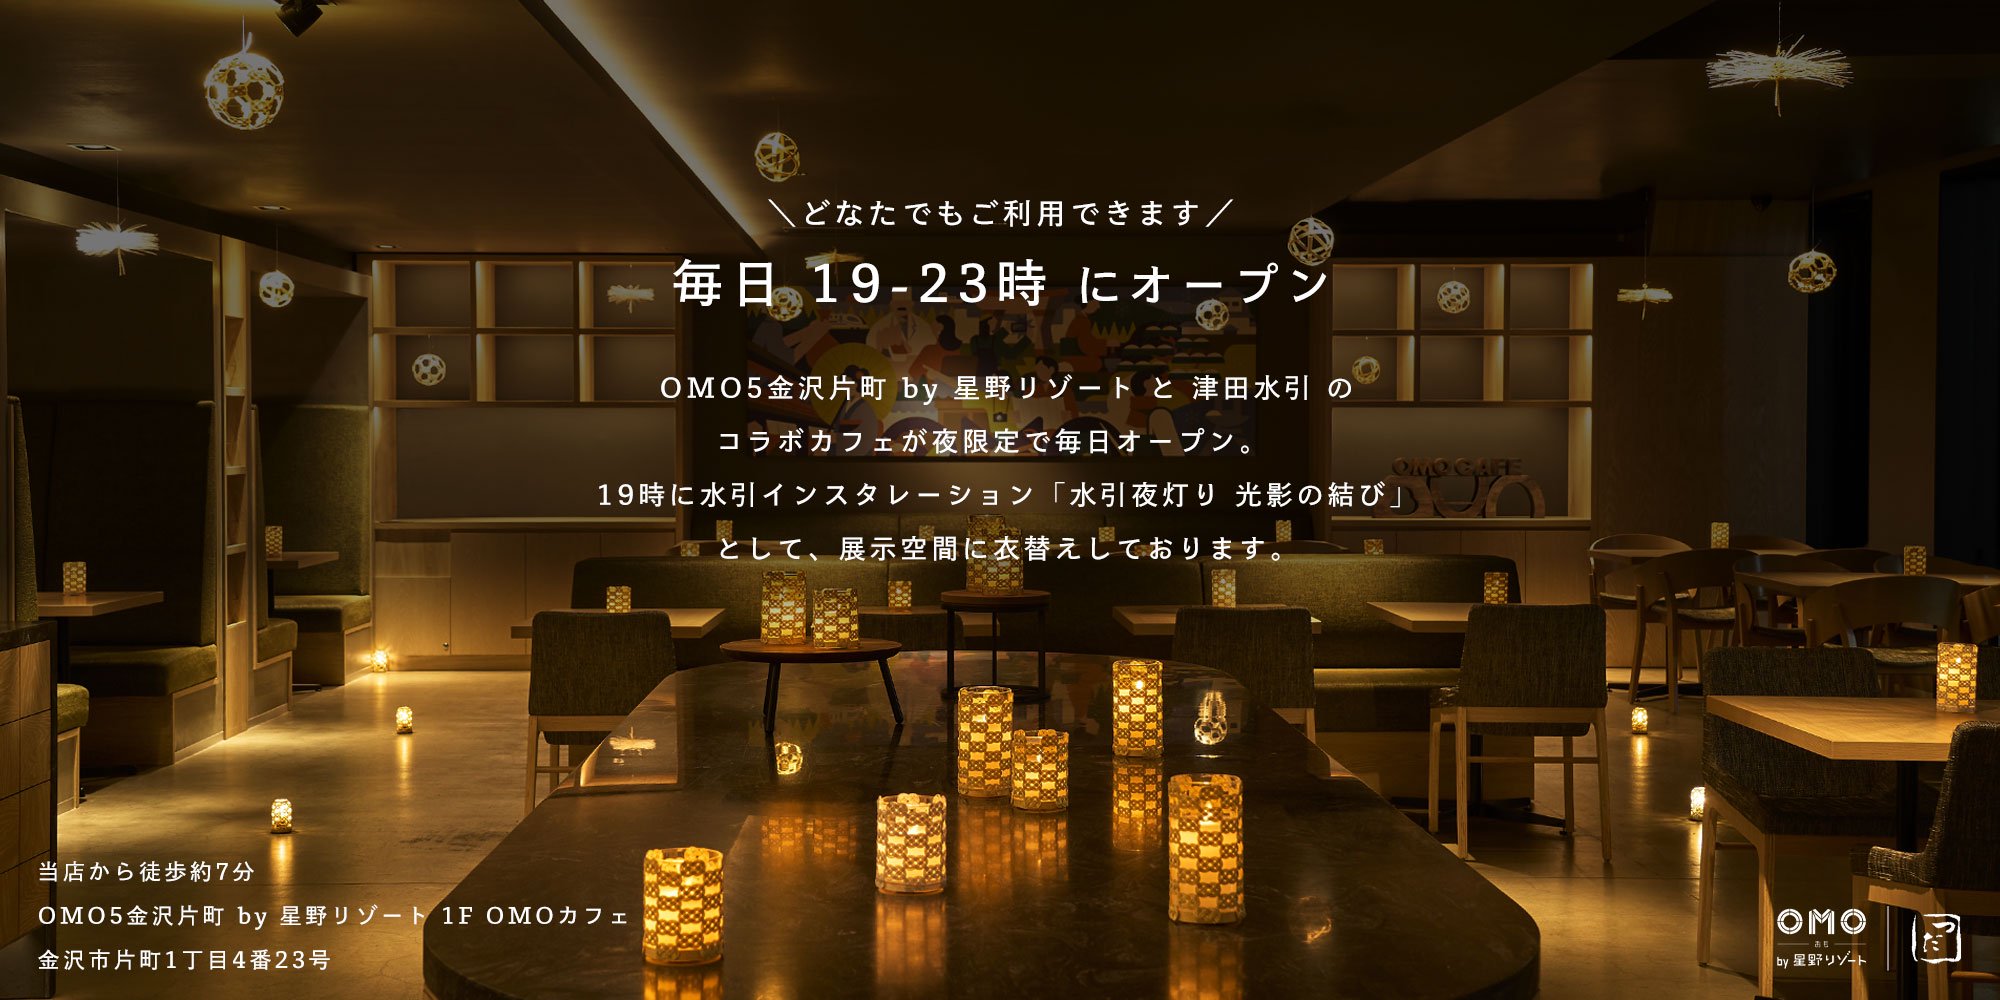 「OMO5金沢片町 by 星野リゾート」と「津田水引折型」のコラボカフェが夜限定でオープン。19-23時の時間帯に、水引インスタレーション「水引夜灯り 光影の結び」として、カフェを展示空間に衣替え致します。